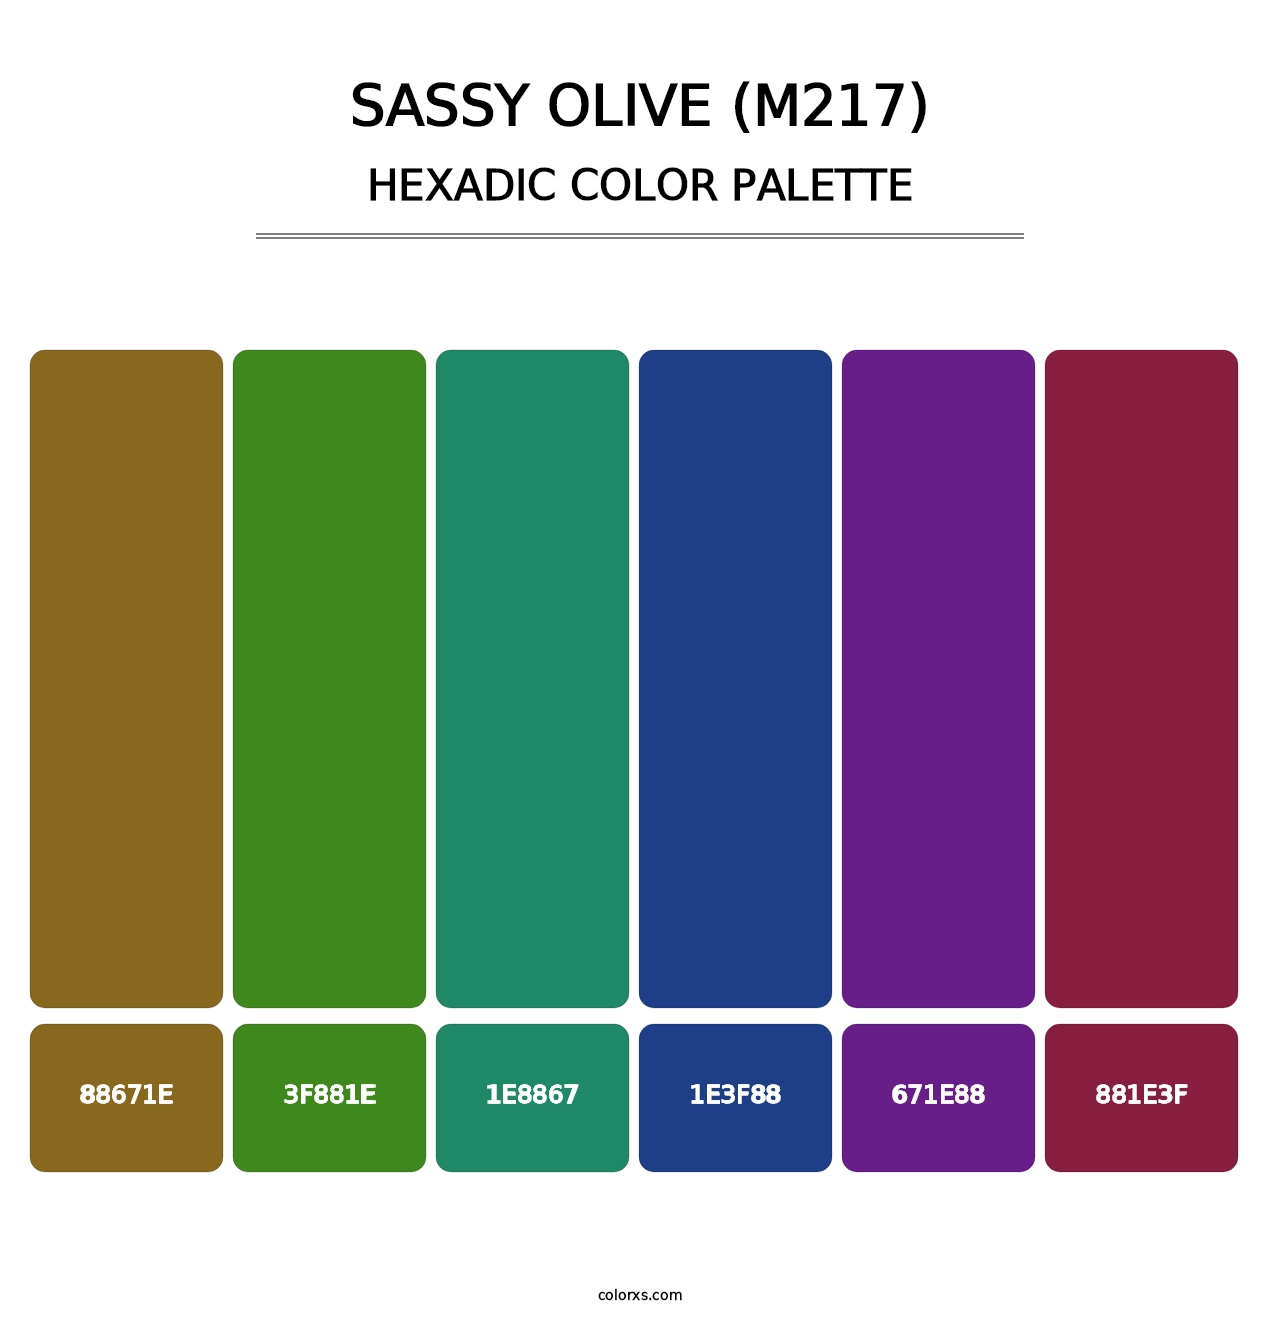 Sassy Olive (M217) - Hexadic Color Palette